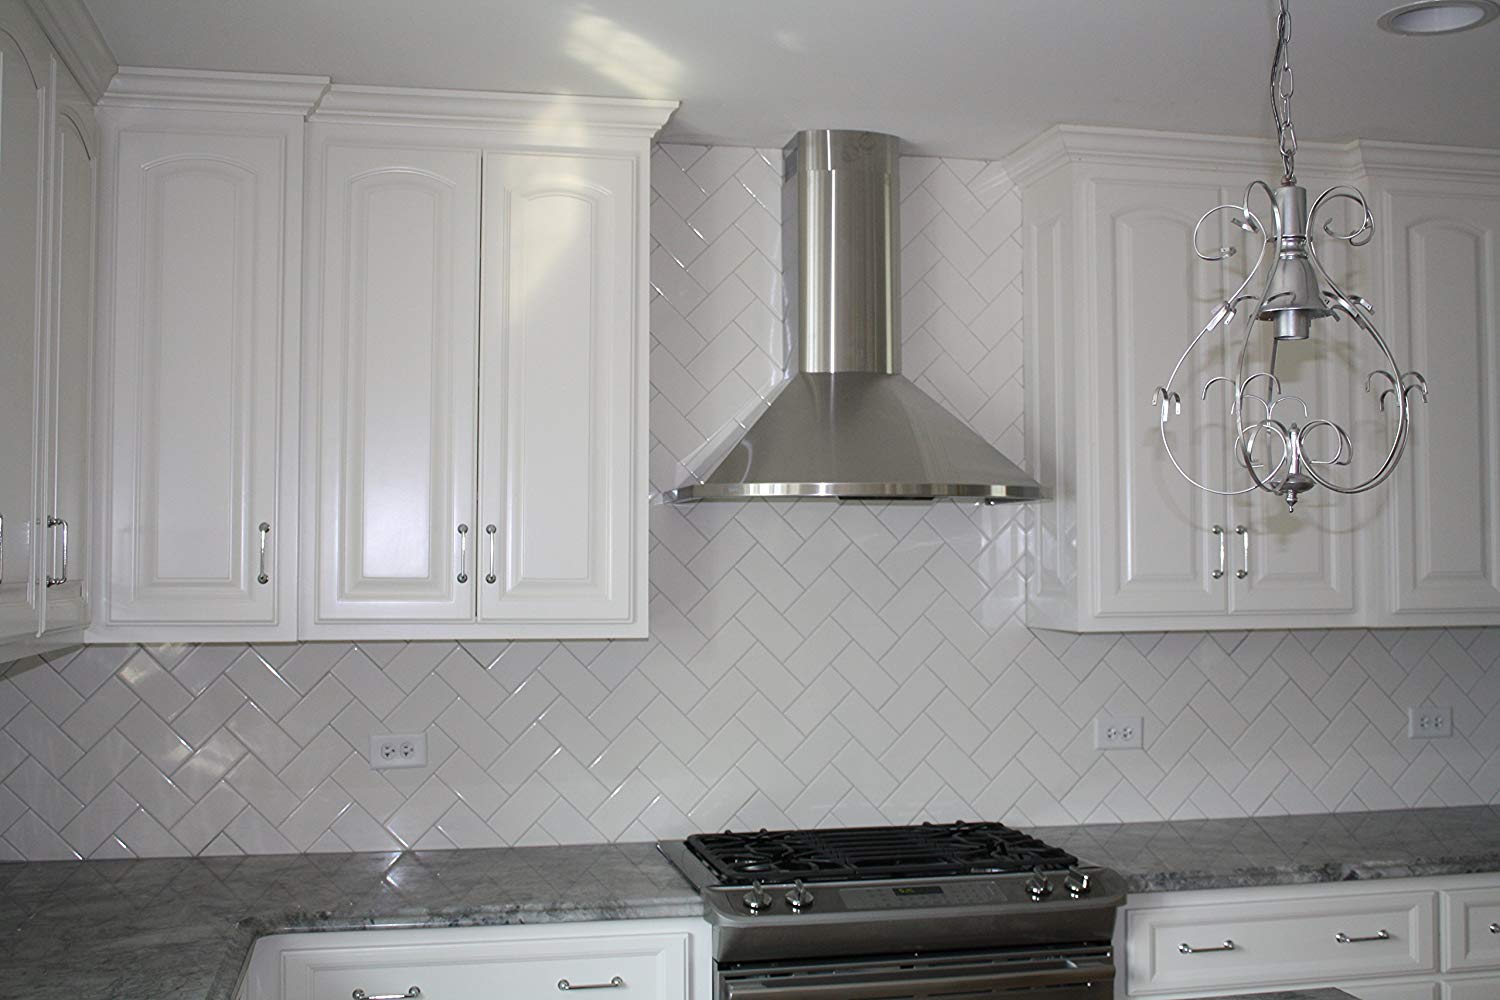 Tenedos 3x6 White Ceramic Bright Glossy Subway Wall Tile (80 pieces - Box of 10 sq.ft.) for Kitchen Bathroom Shower Backsplash